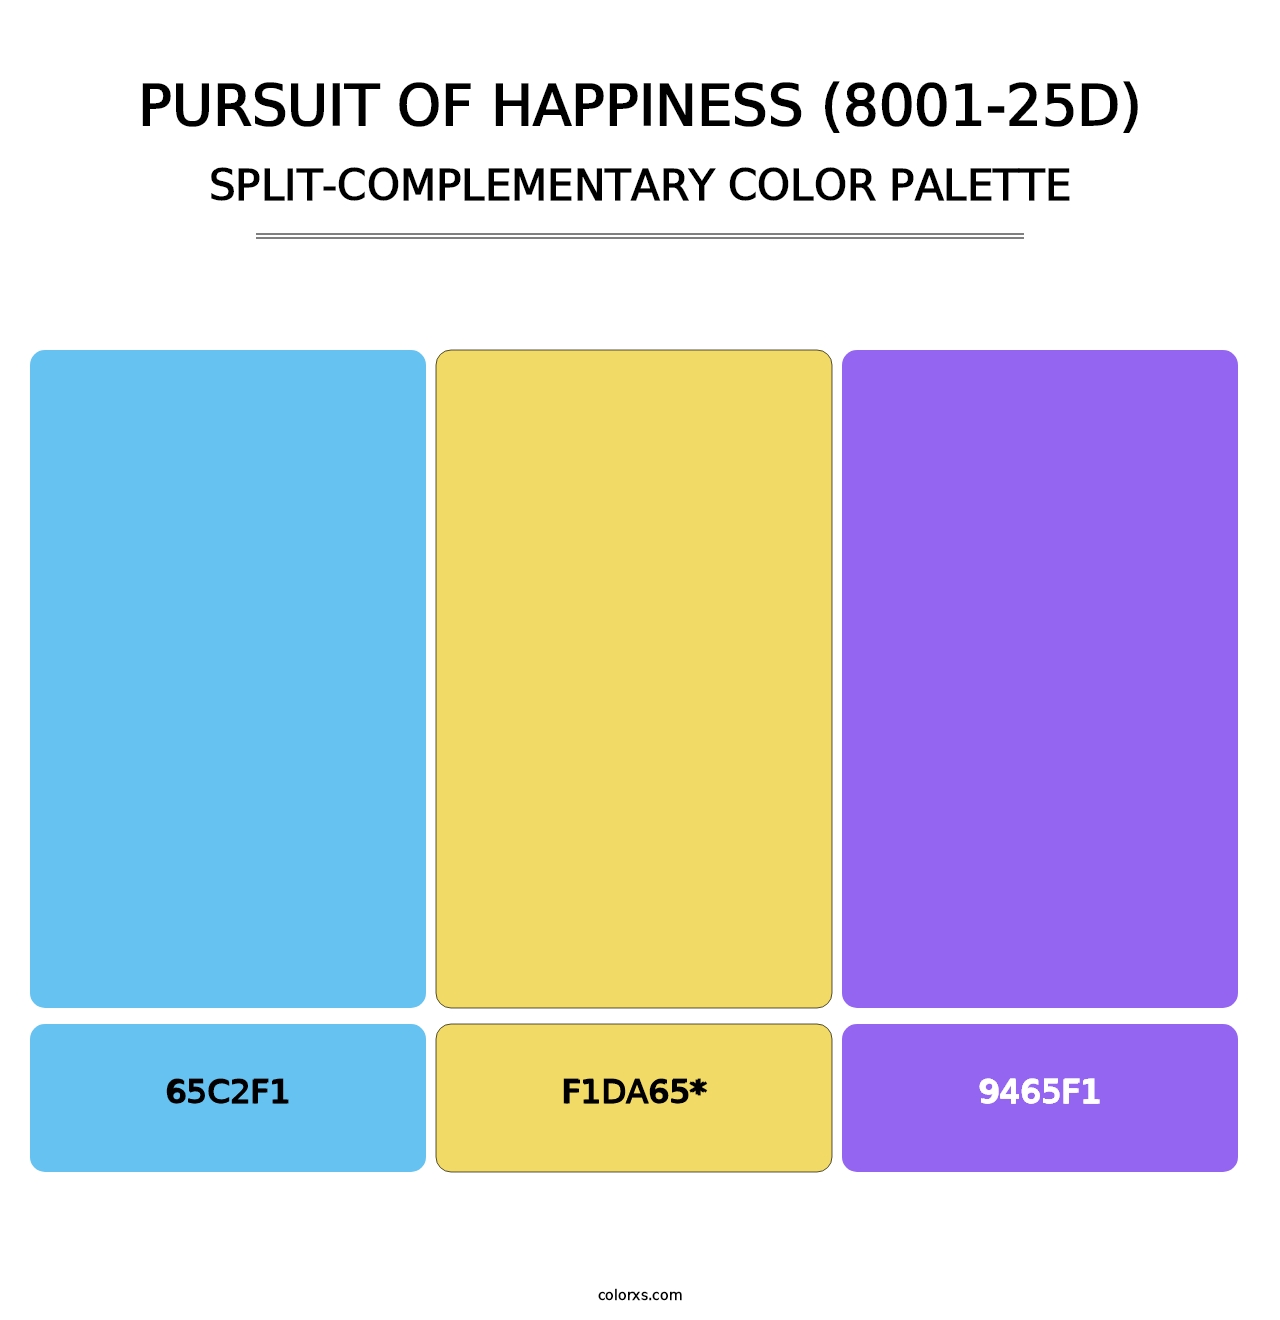 Pursuit of Happiness (8001-25D) - Split-Complementary Color Palette